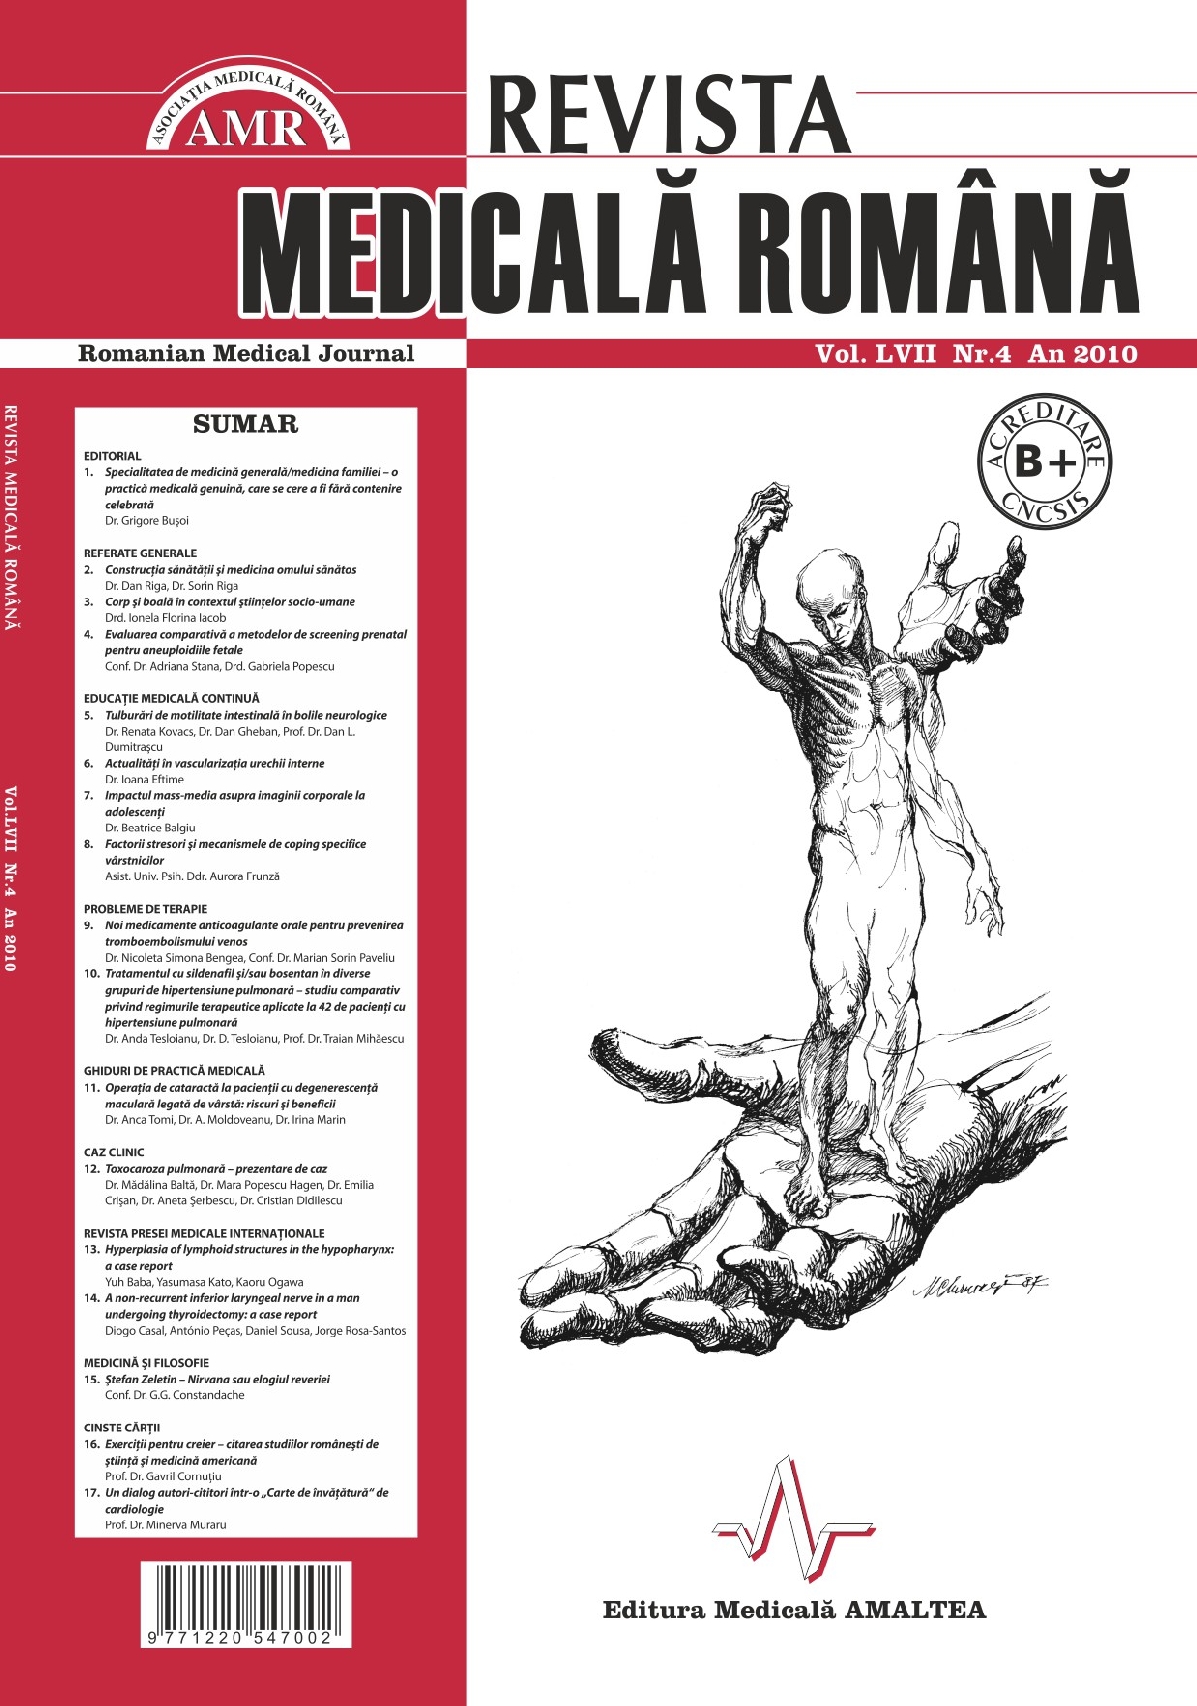 REVISTA MEDICALA ROMANA - Romanian Medical Journal, Vol. LVII, No. 4, Year 2010